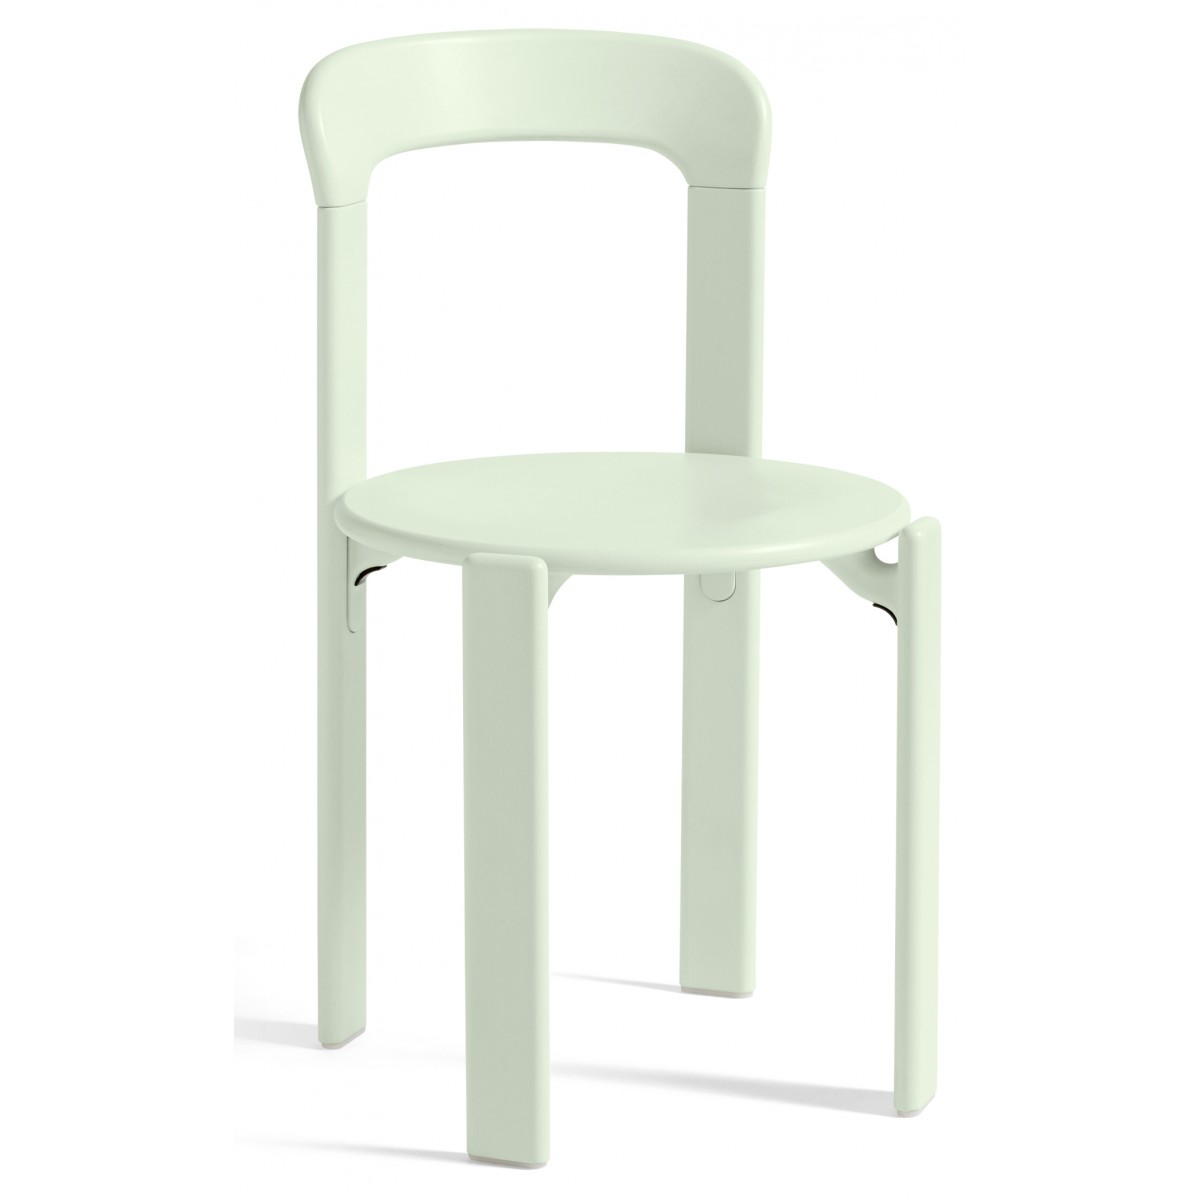 Soft mint - REY chair